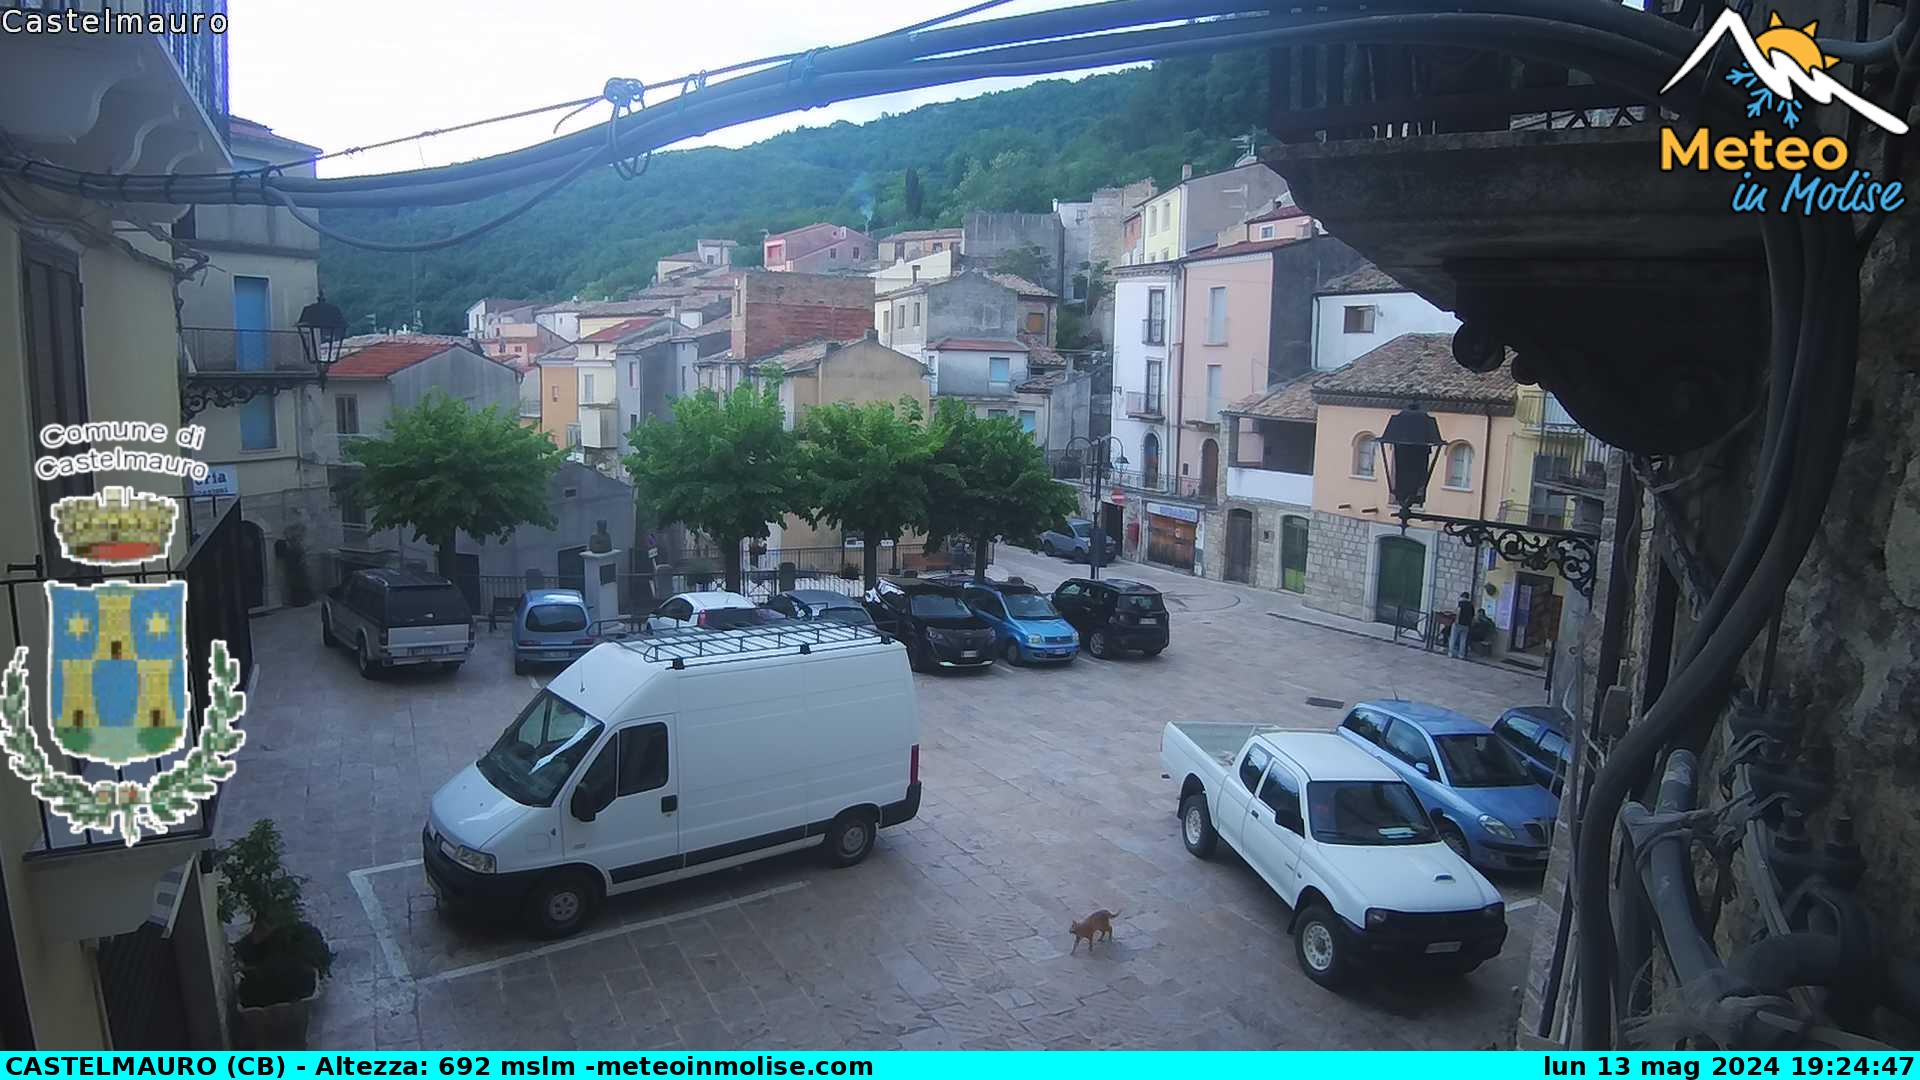 Webcam di Castelmauro